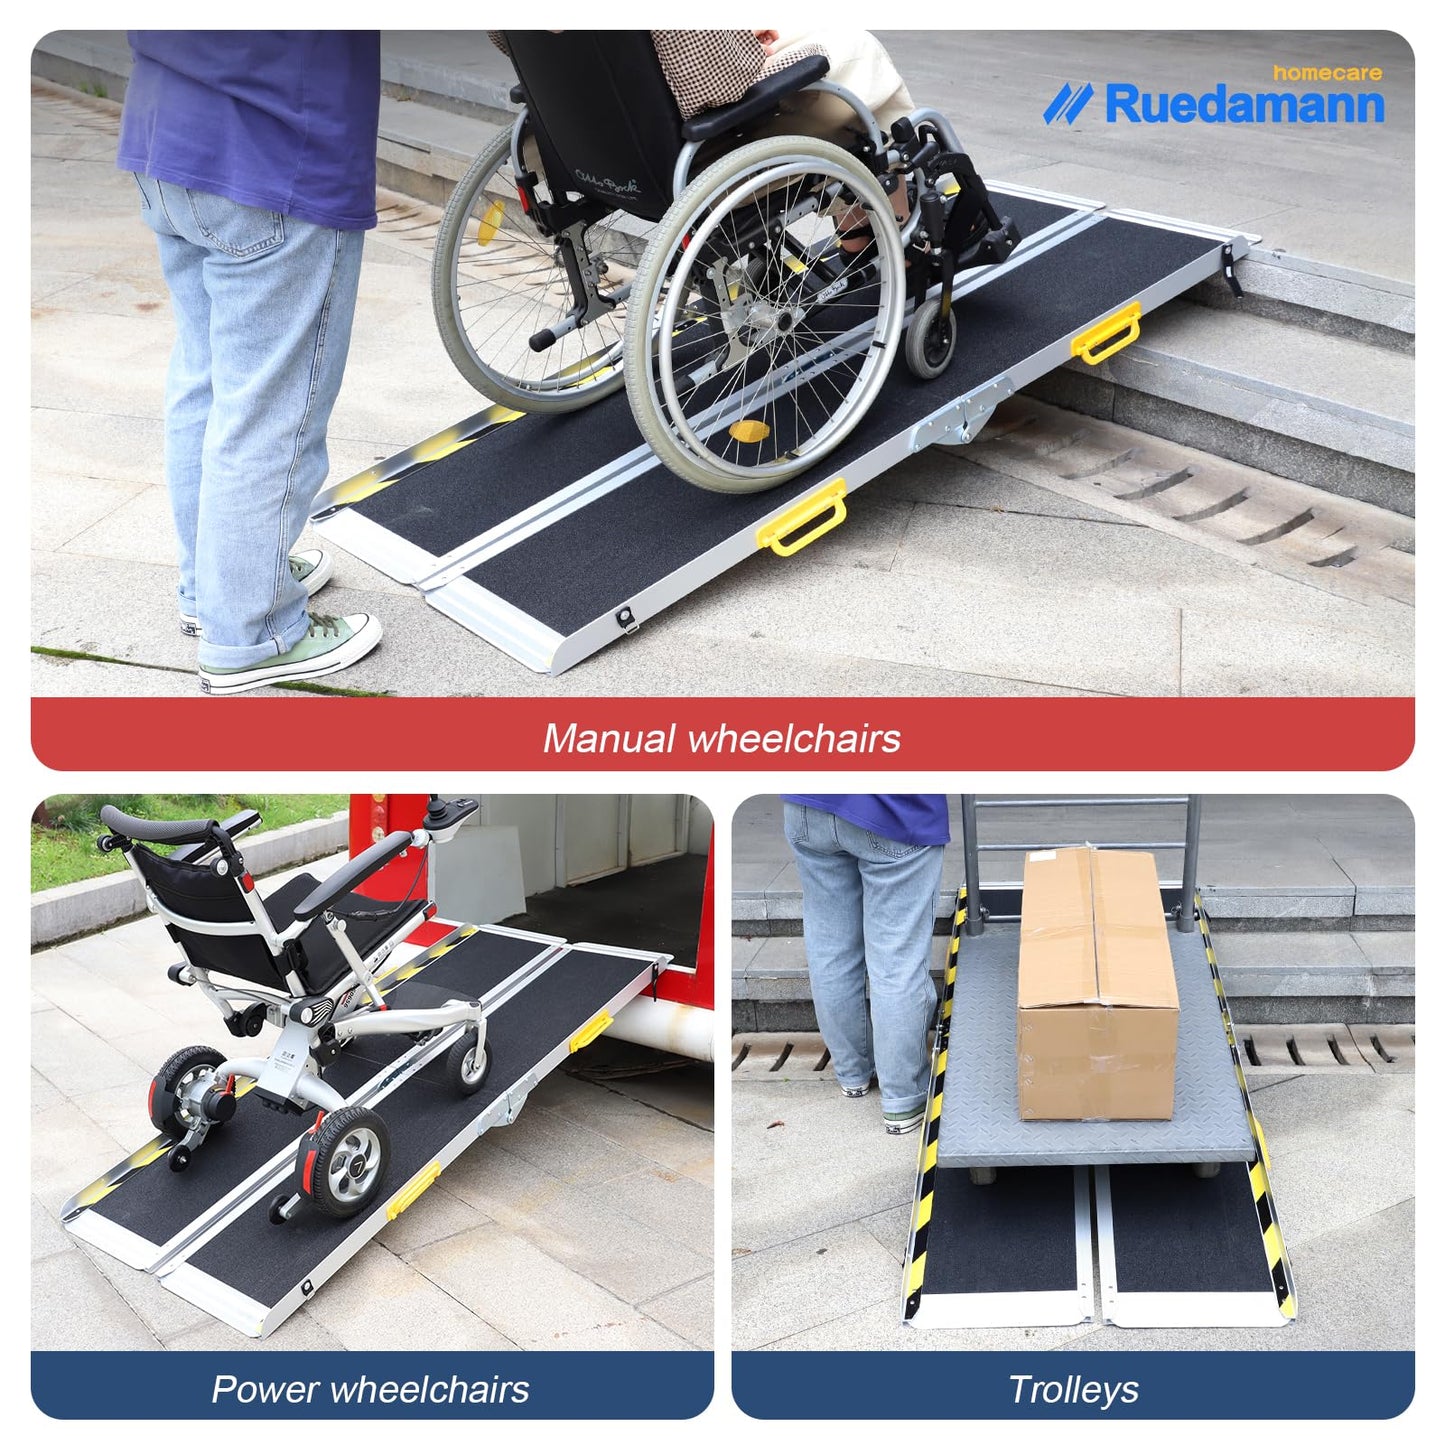 Ruedamann® Non-Skid Aluminum Folding Wheelchair Ramp Two Pieces Separated